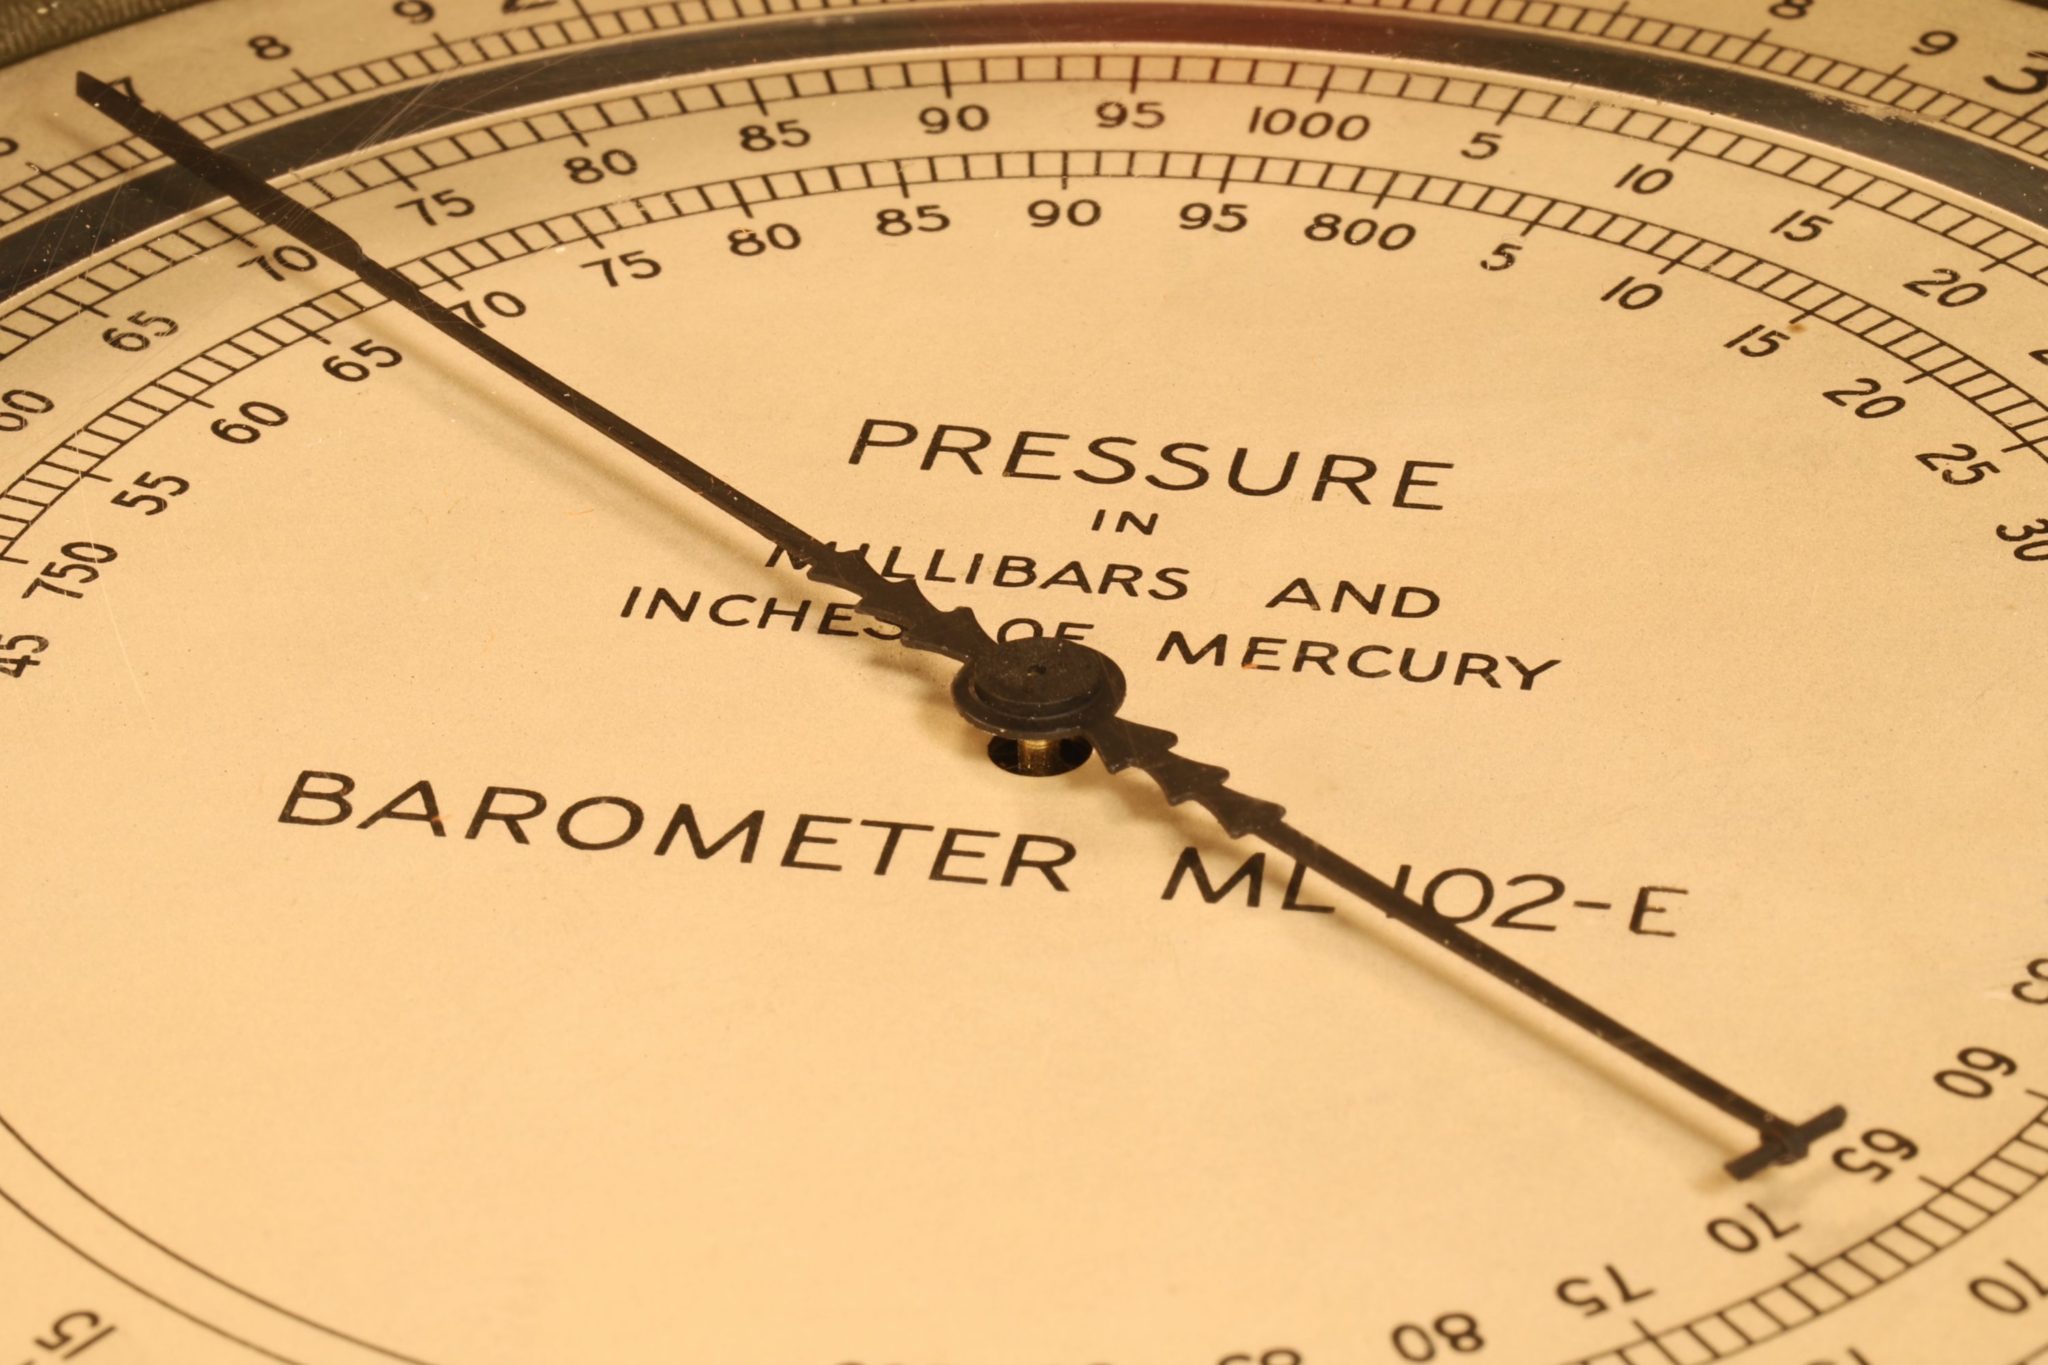 Image of Bendix Precision Barometer ML-102-E